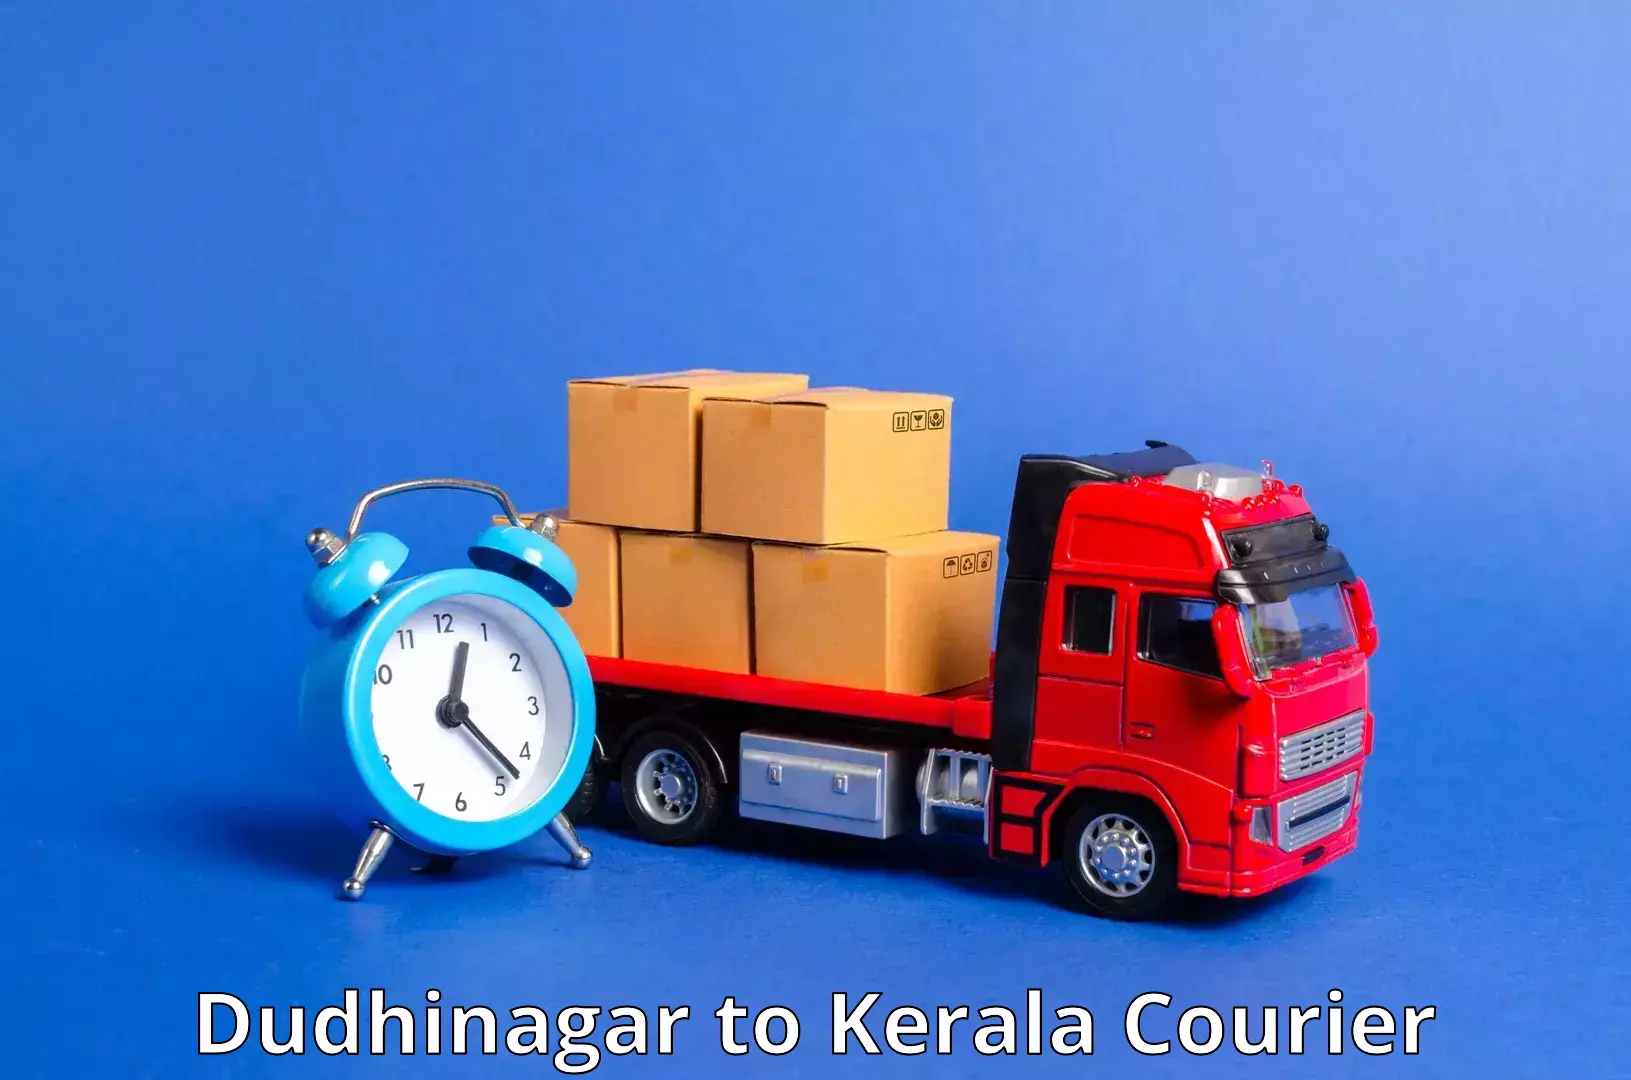 On-demand shipping options Dudhinagar to Cochin Port Kochi